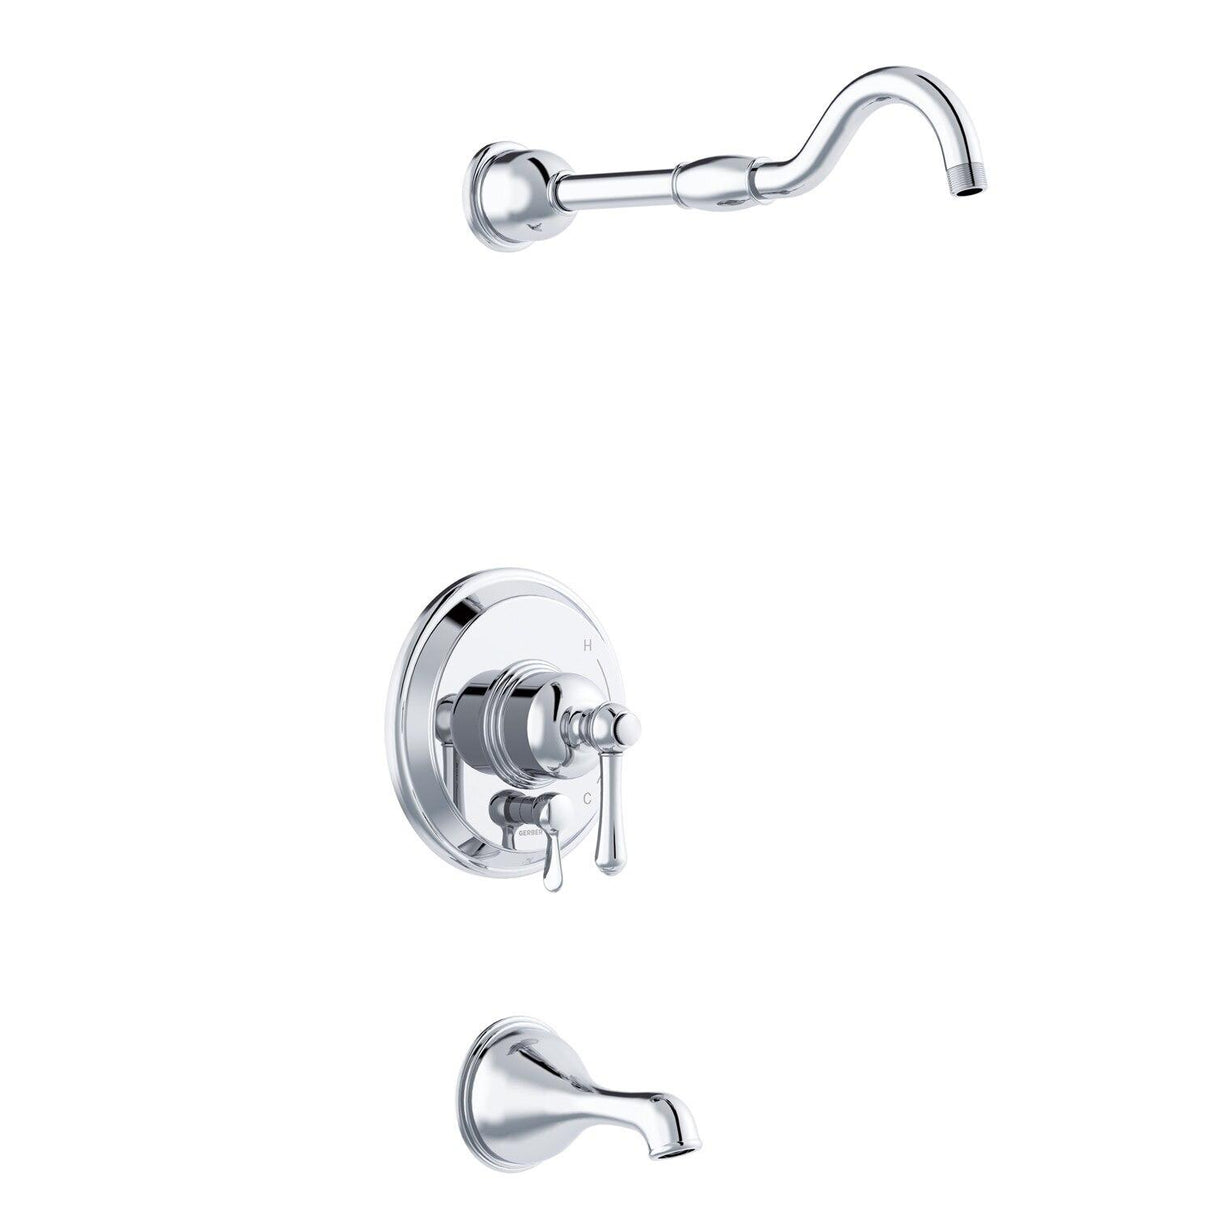 Gerber D502157LSBNTC Brushed Nickel Opulence Tub & Shower Trim Kit, Without Showerhead